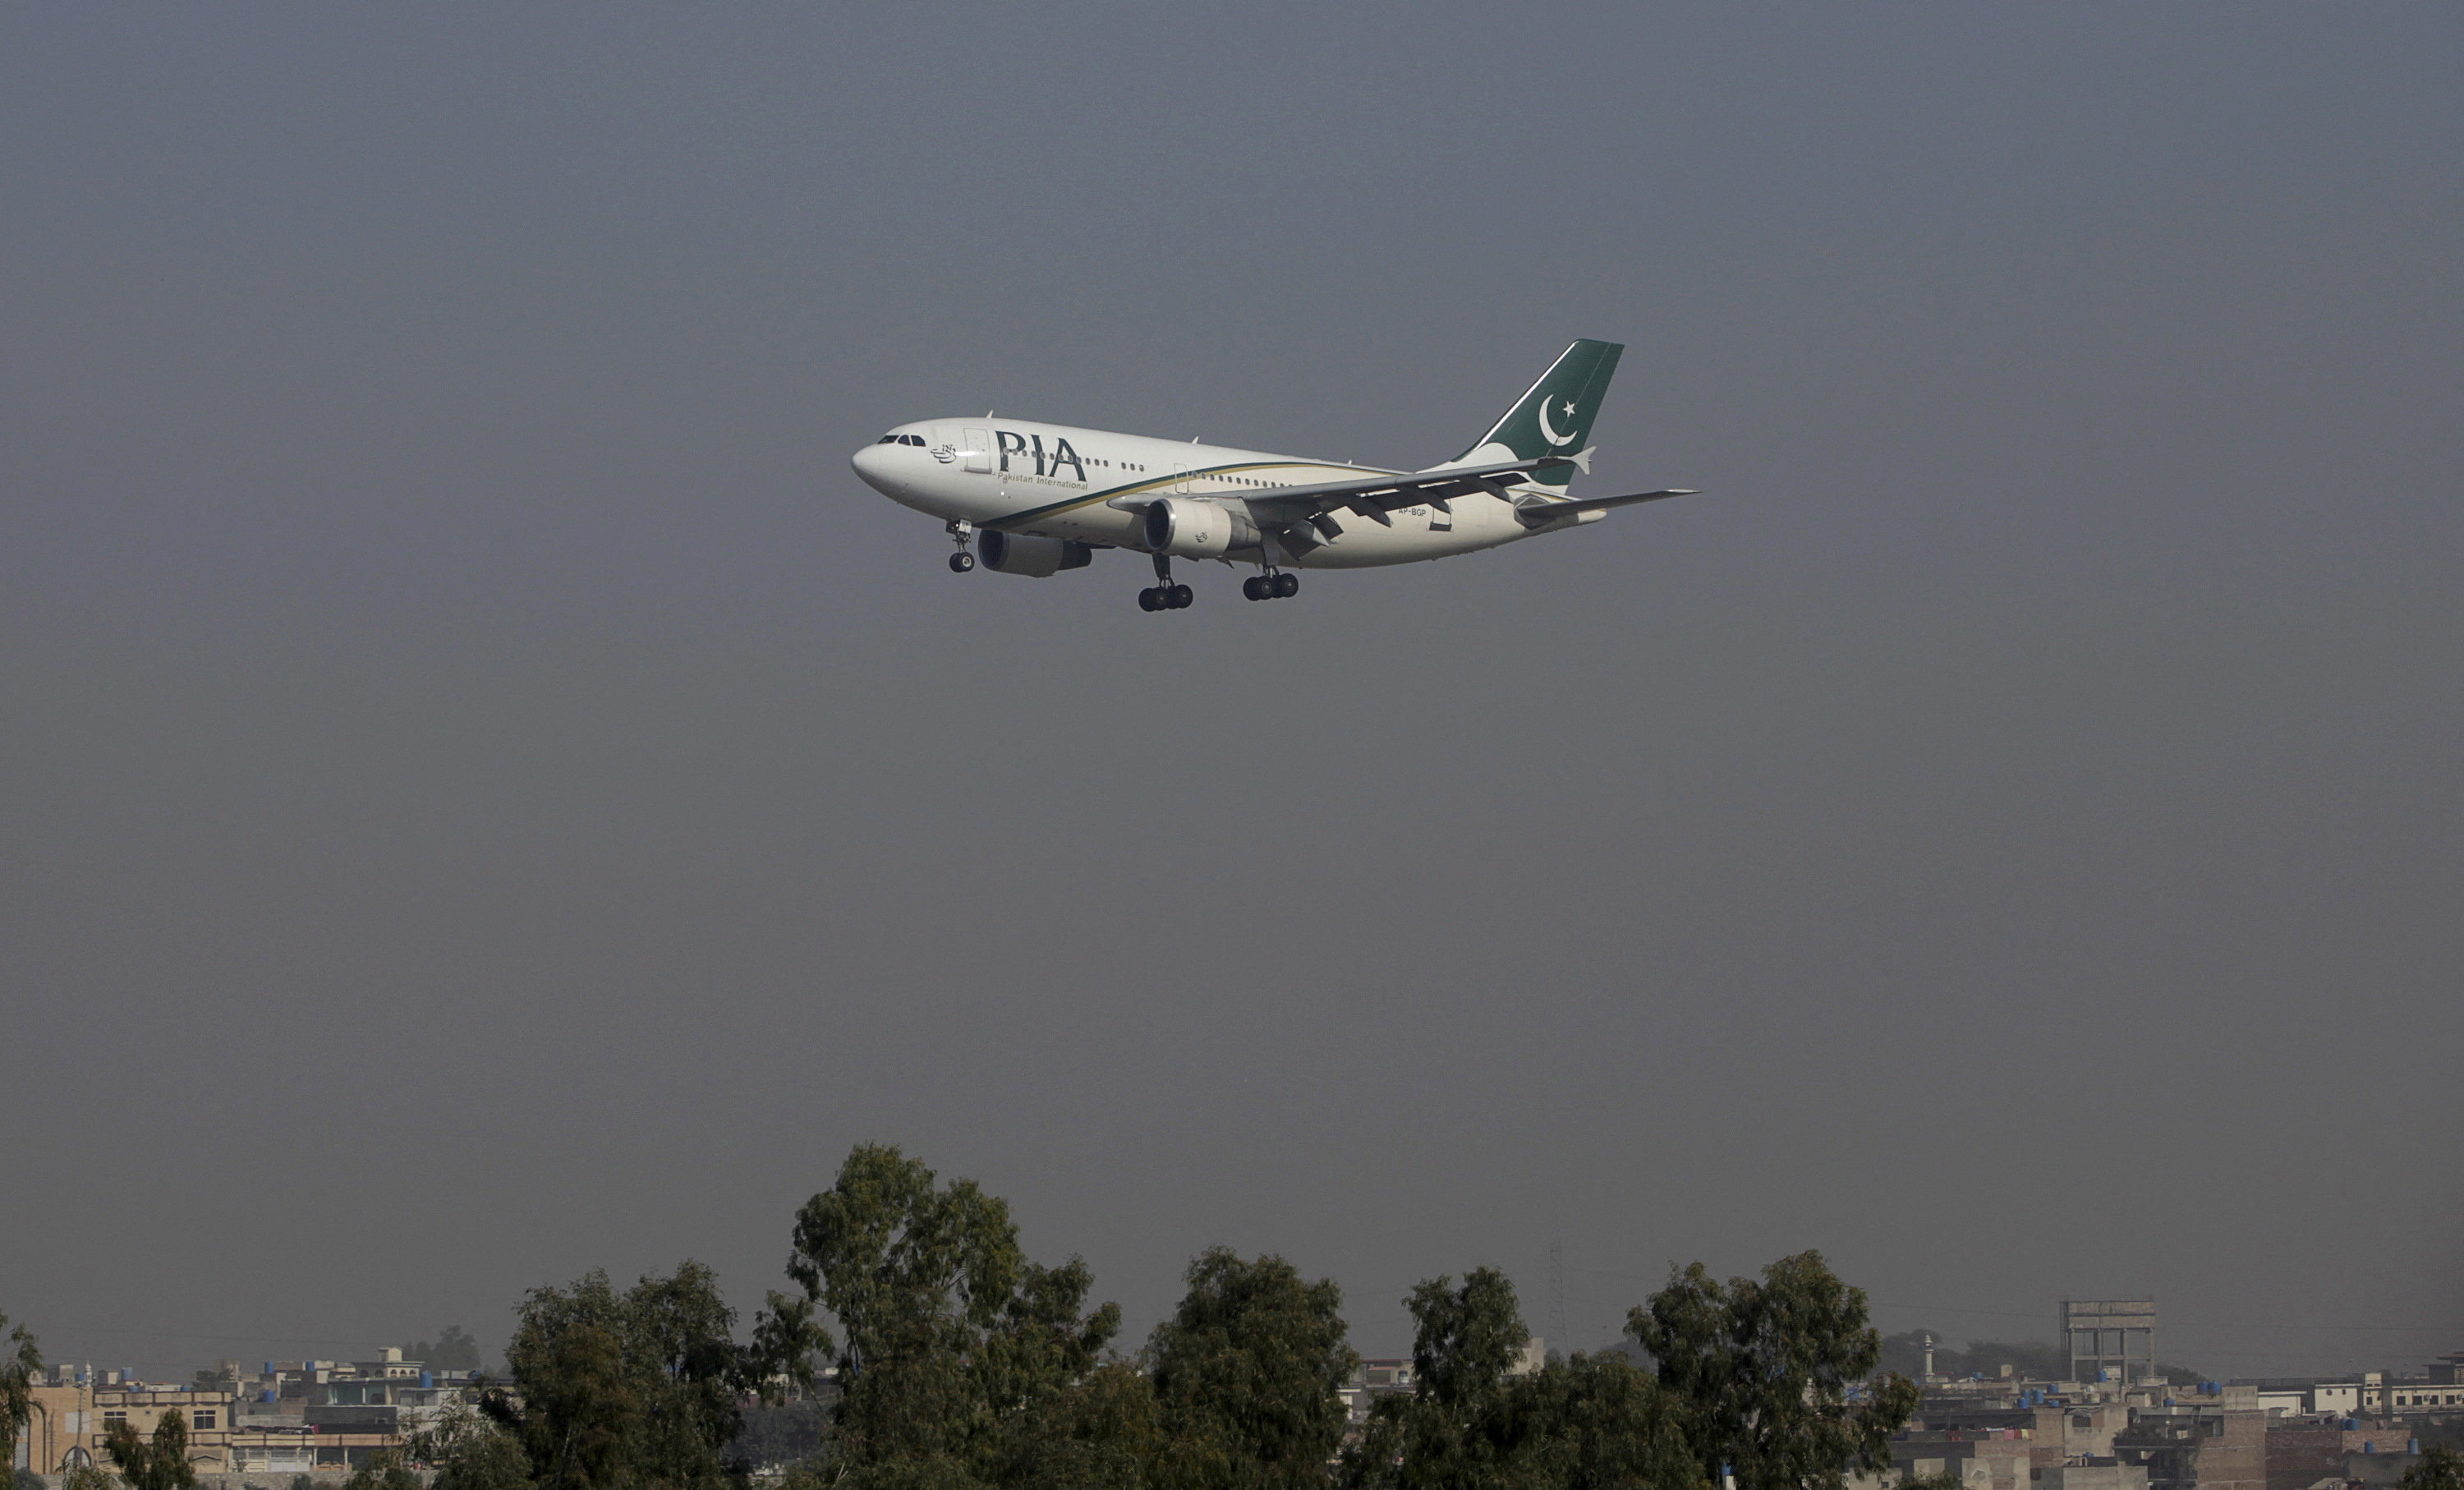  A Pakistan International Airlines passenger plane arriving at Benazir International airport in Islamabad. Photo: Reuters